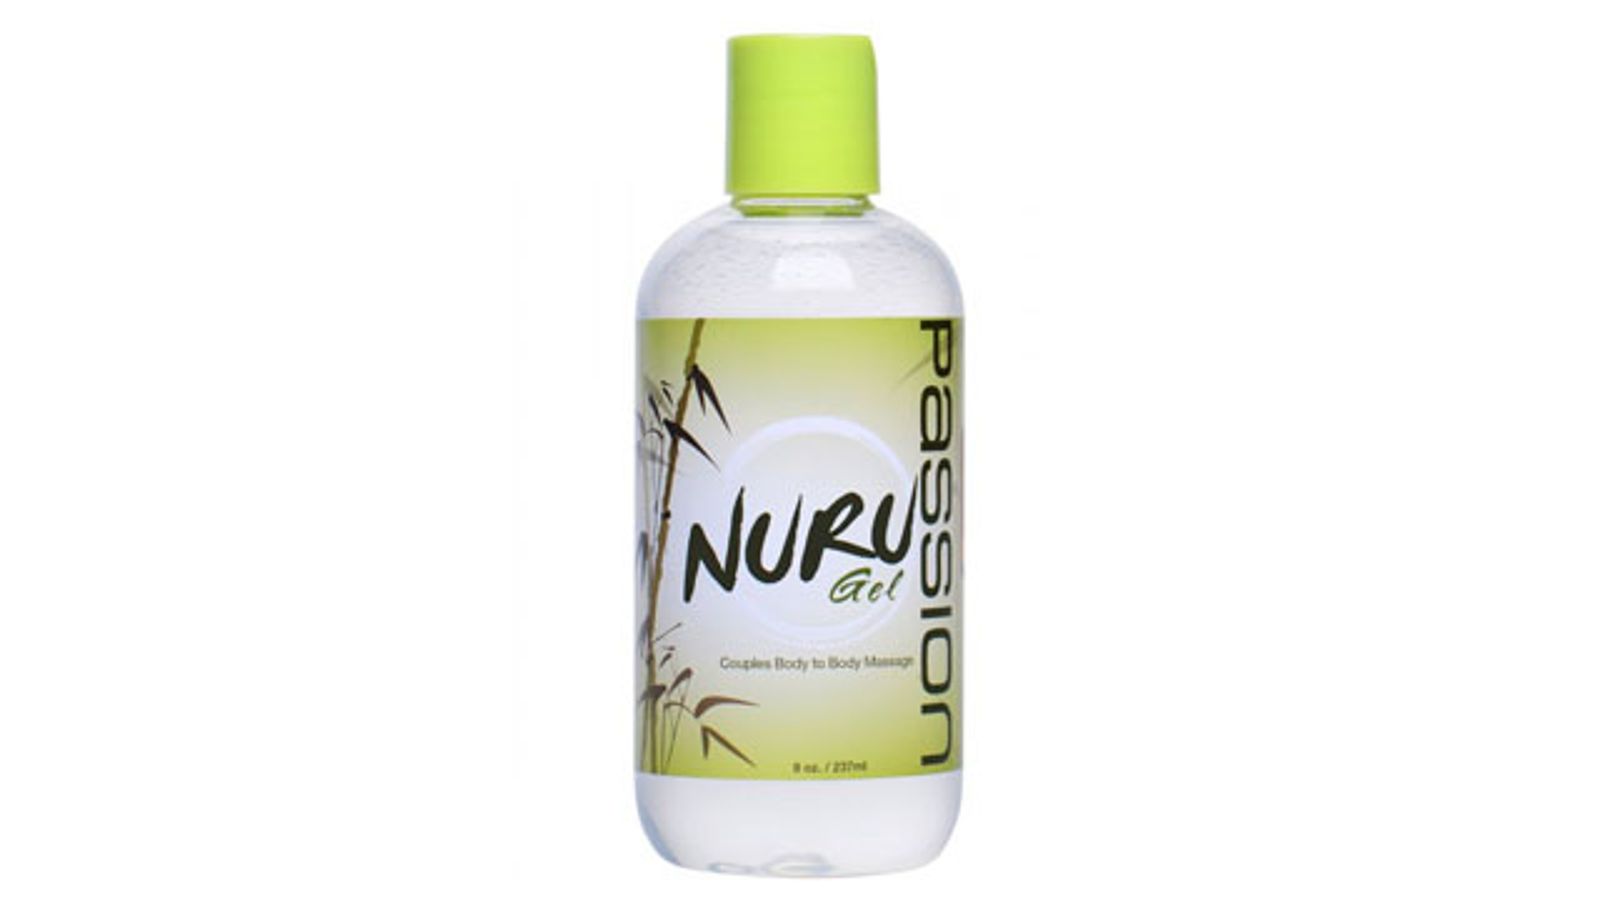 XR Brands Brings Nuru Body Massage to Retailers Worldwide